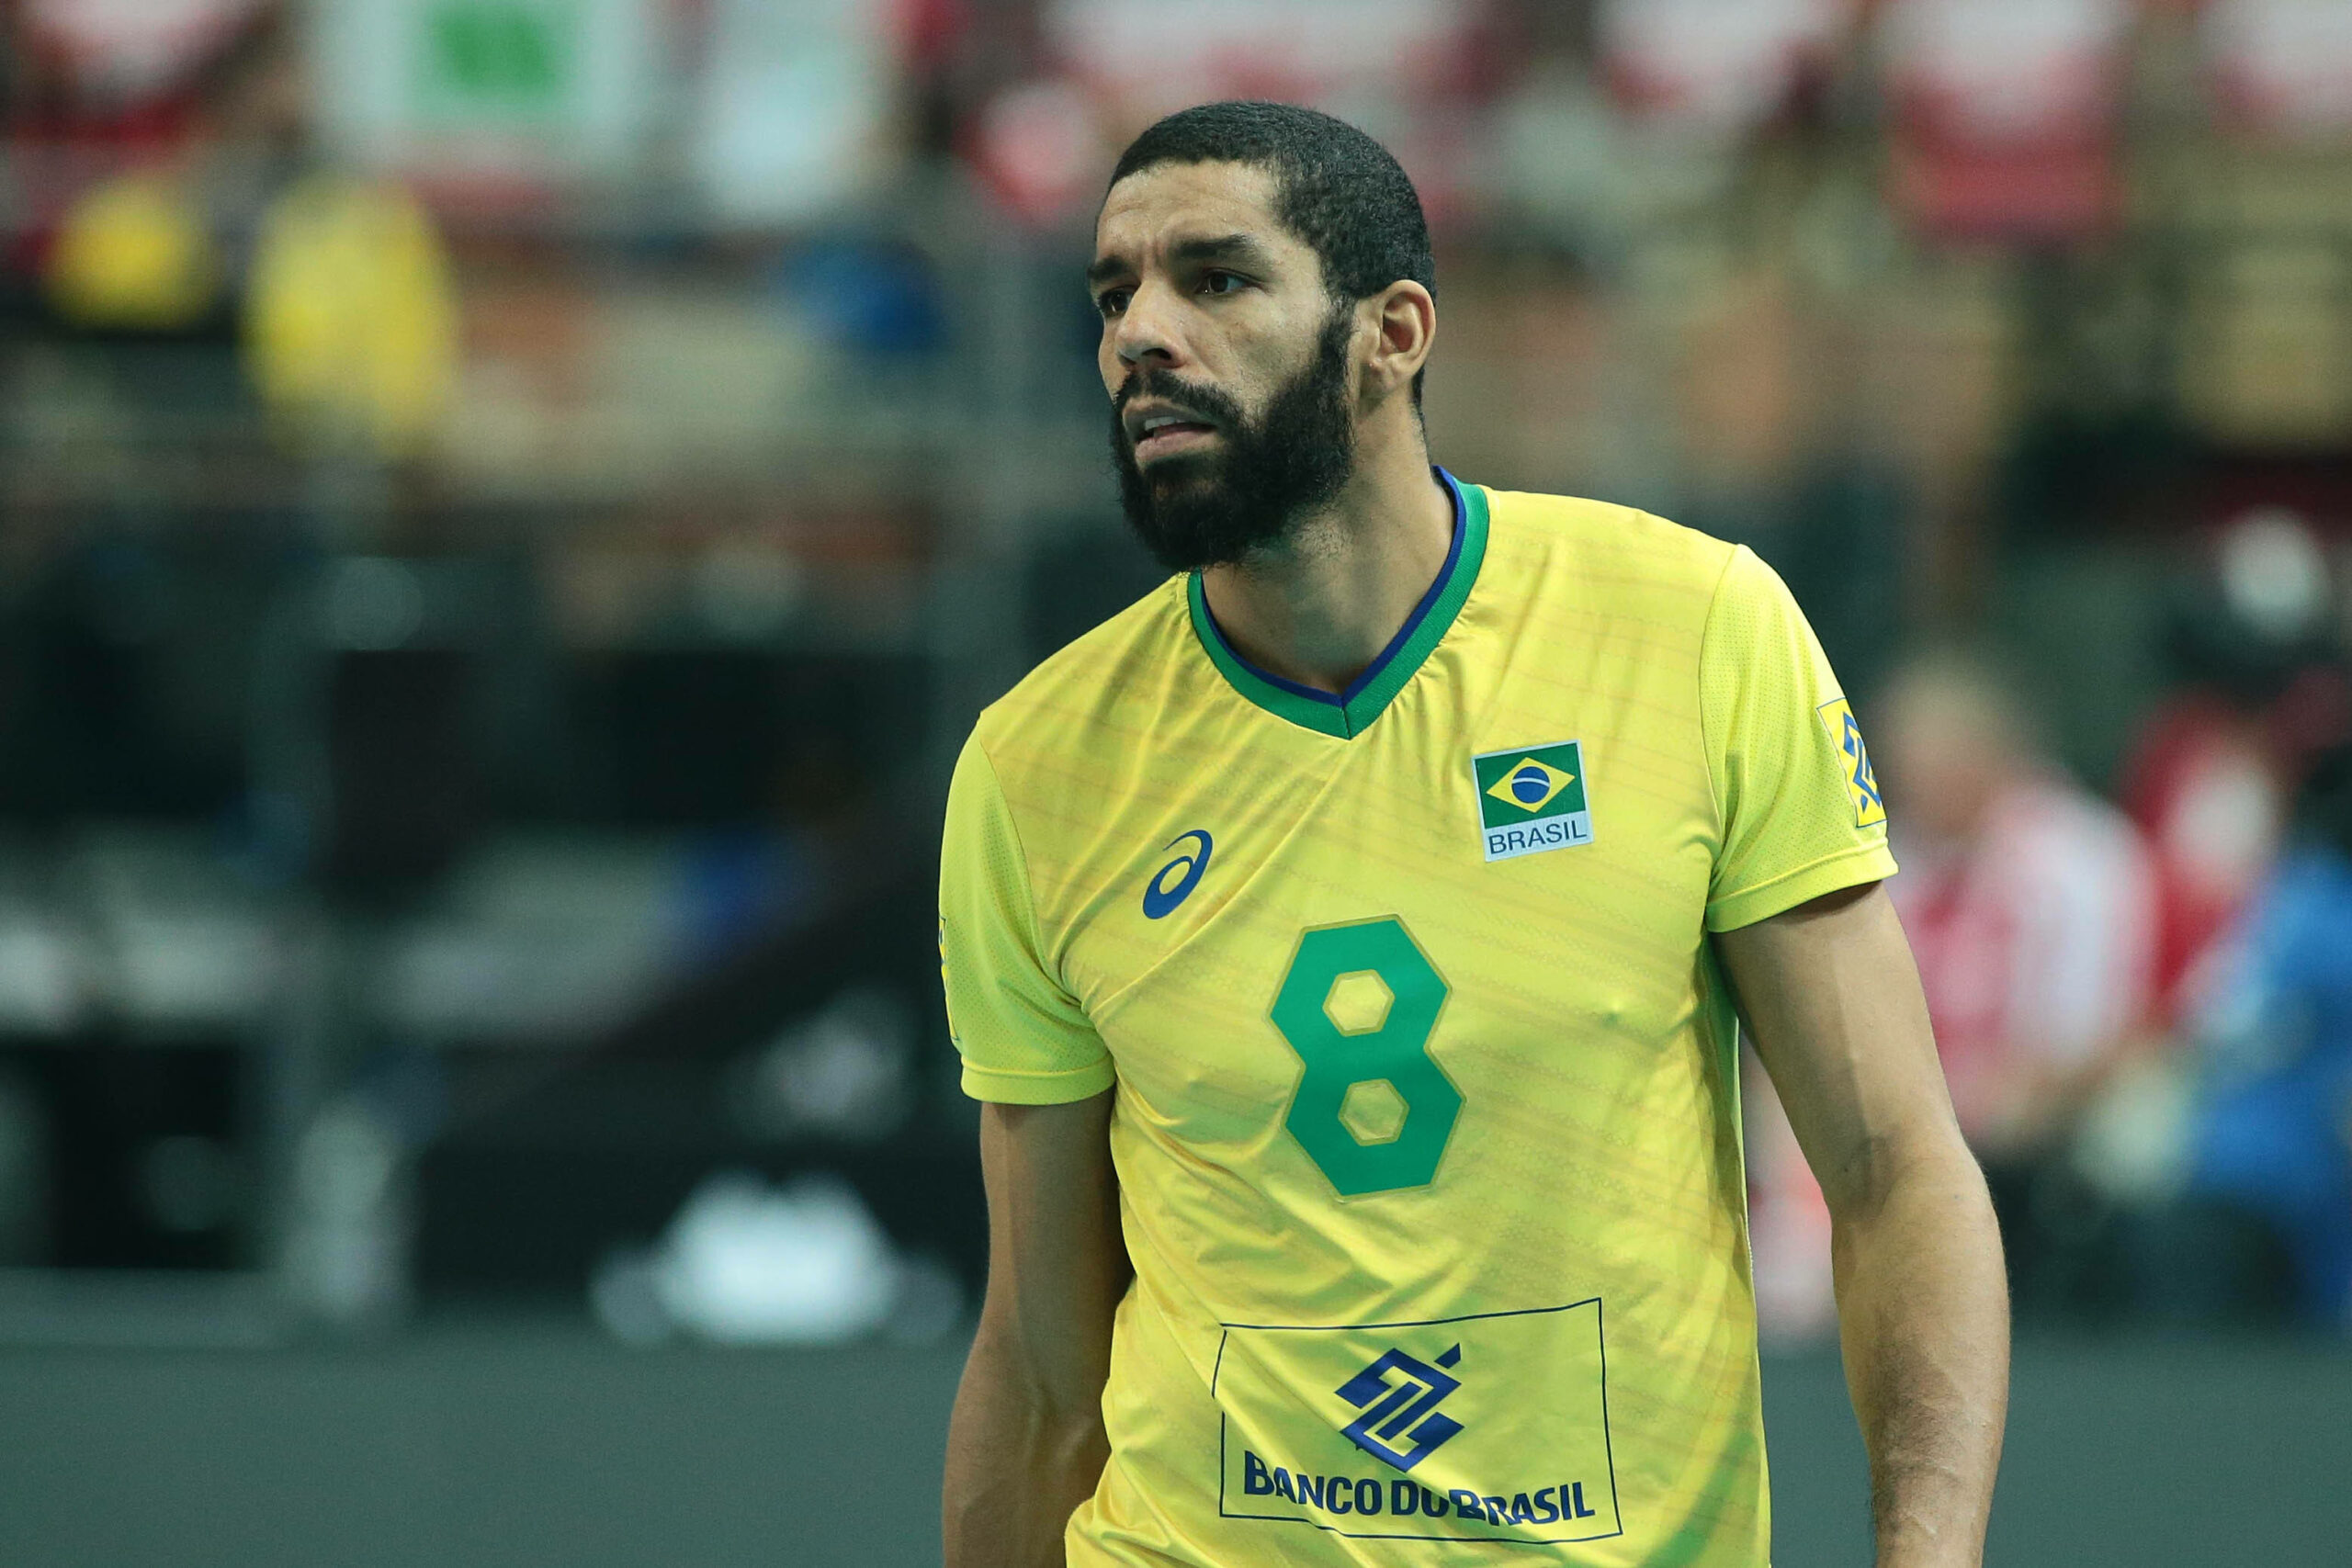 Volleyball-Olympiasieger Wallace de Souza